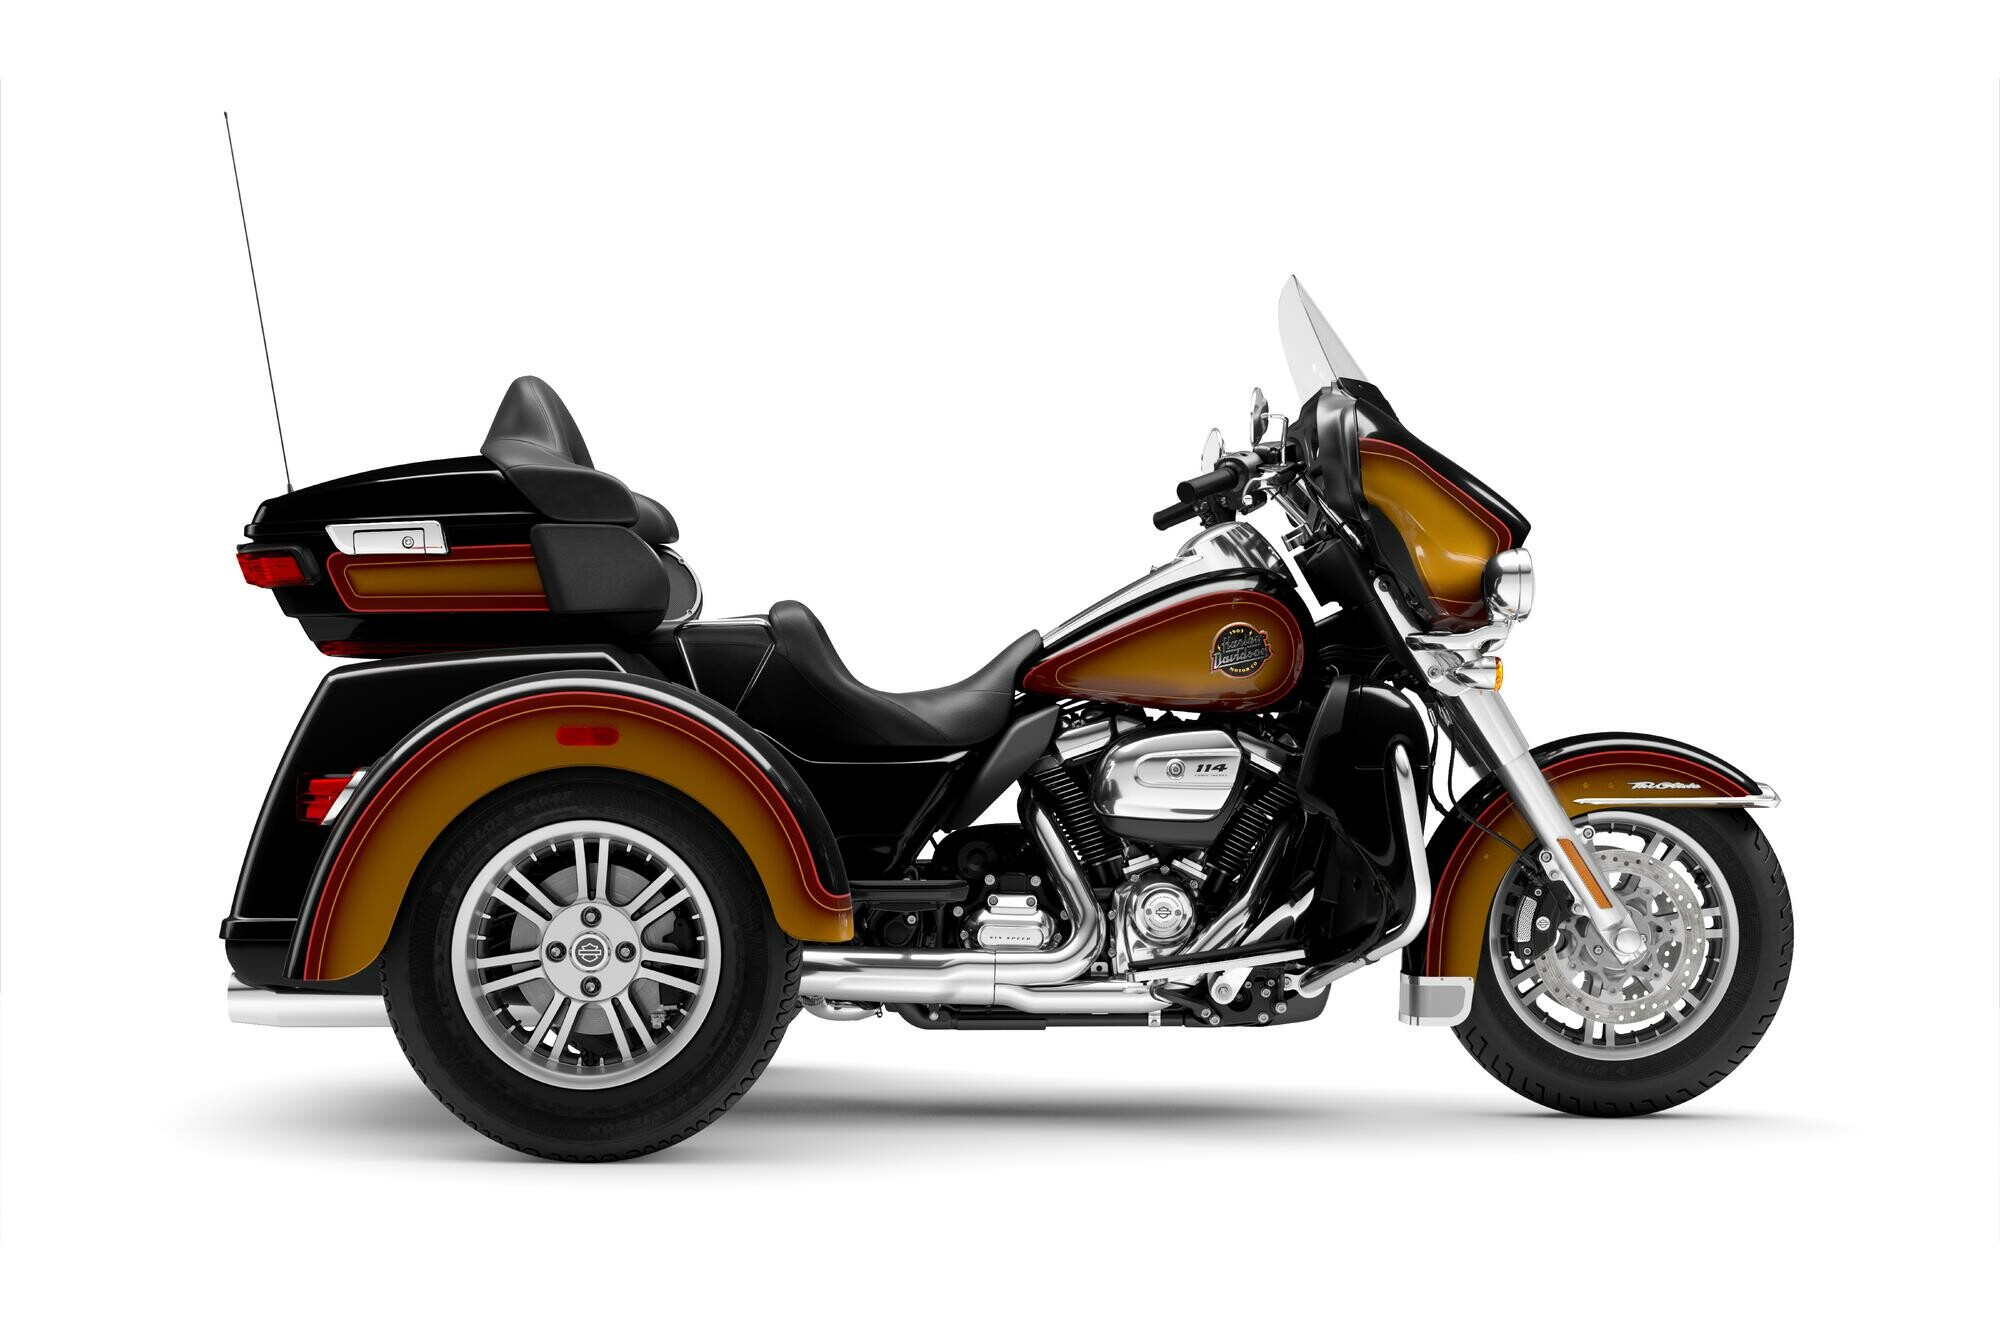 Harley-Davidson Introduces New Limited-Edition Models Evoking Nostalgia